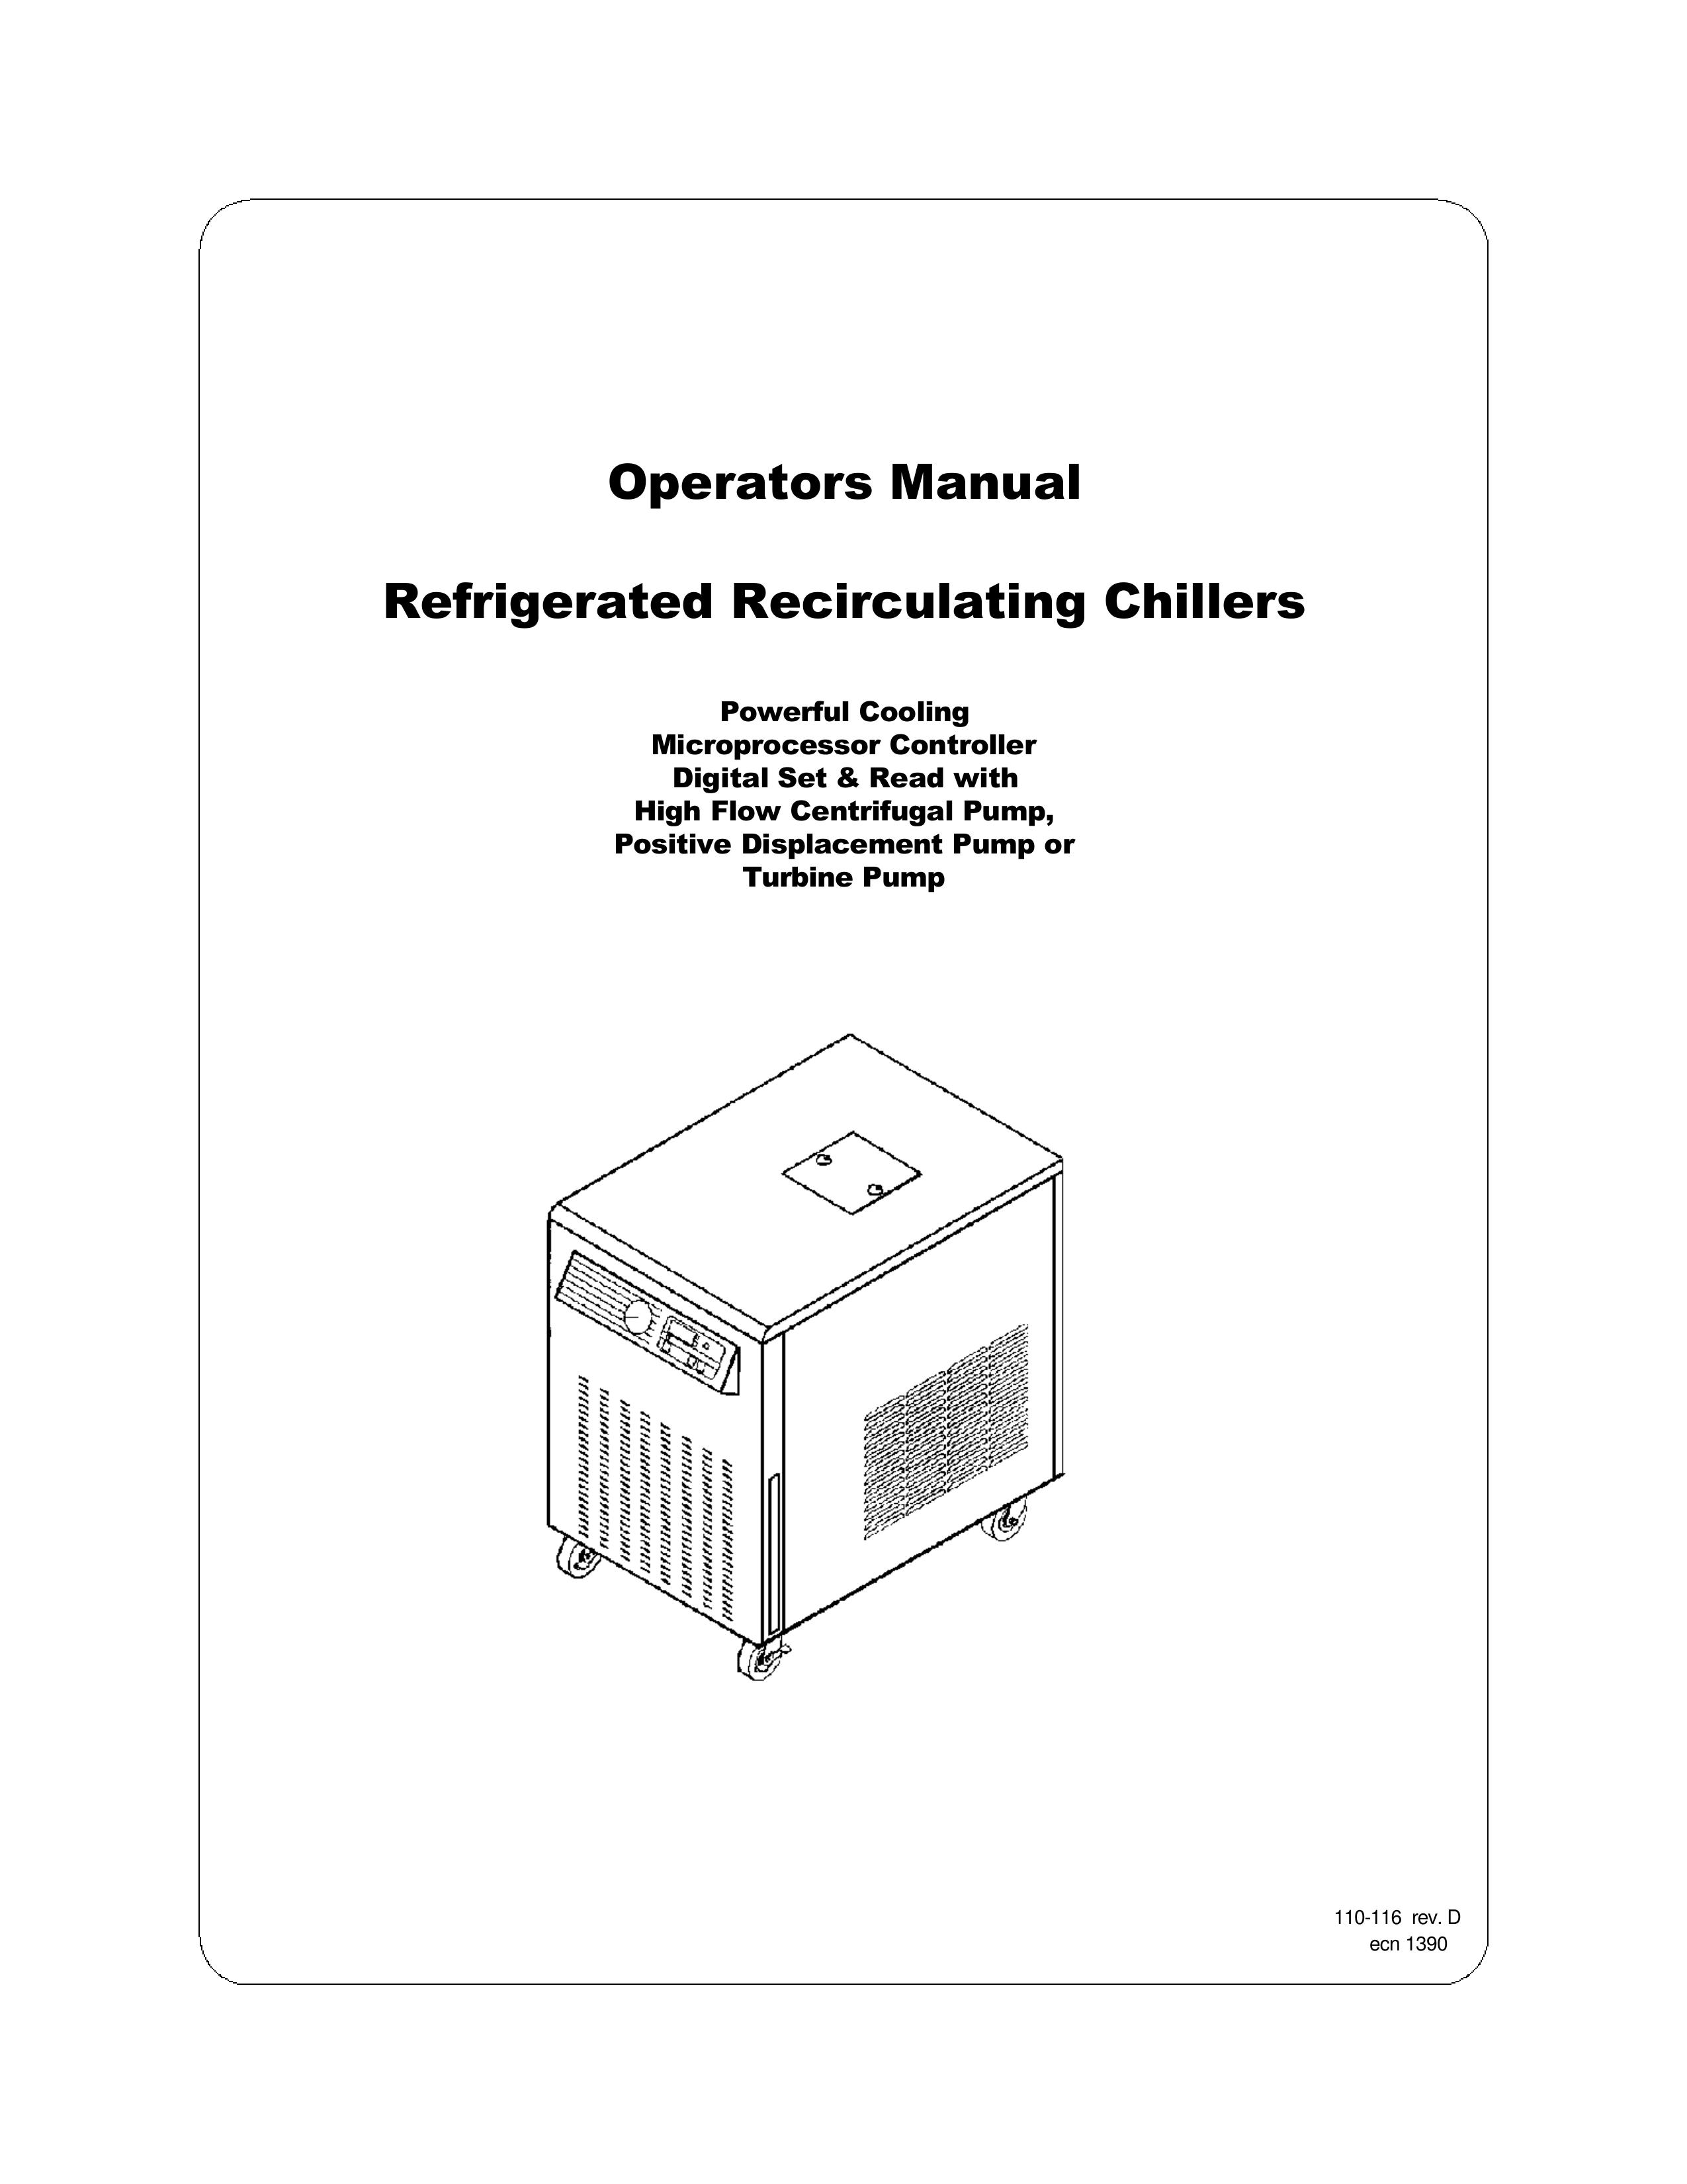 HP (Hewlett-Packard) Refrigerated Recirculating Chillers Refrigerator User Manual